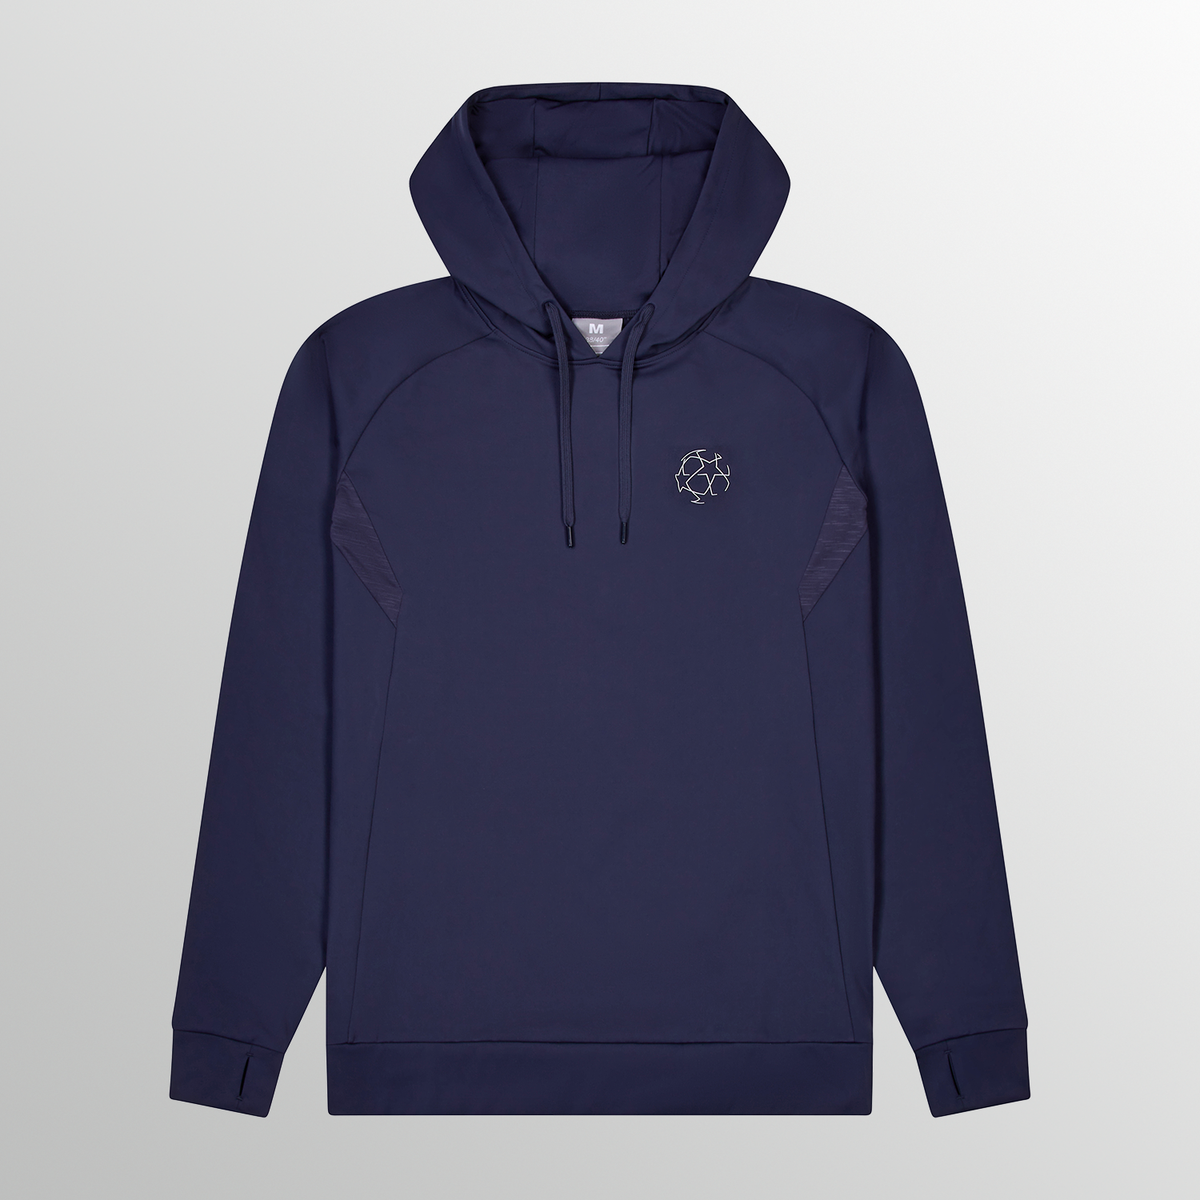 UEFA Champions League Premium Eco Tech hoodie